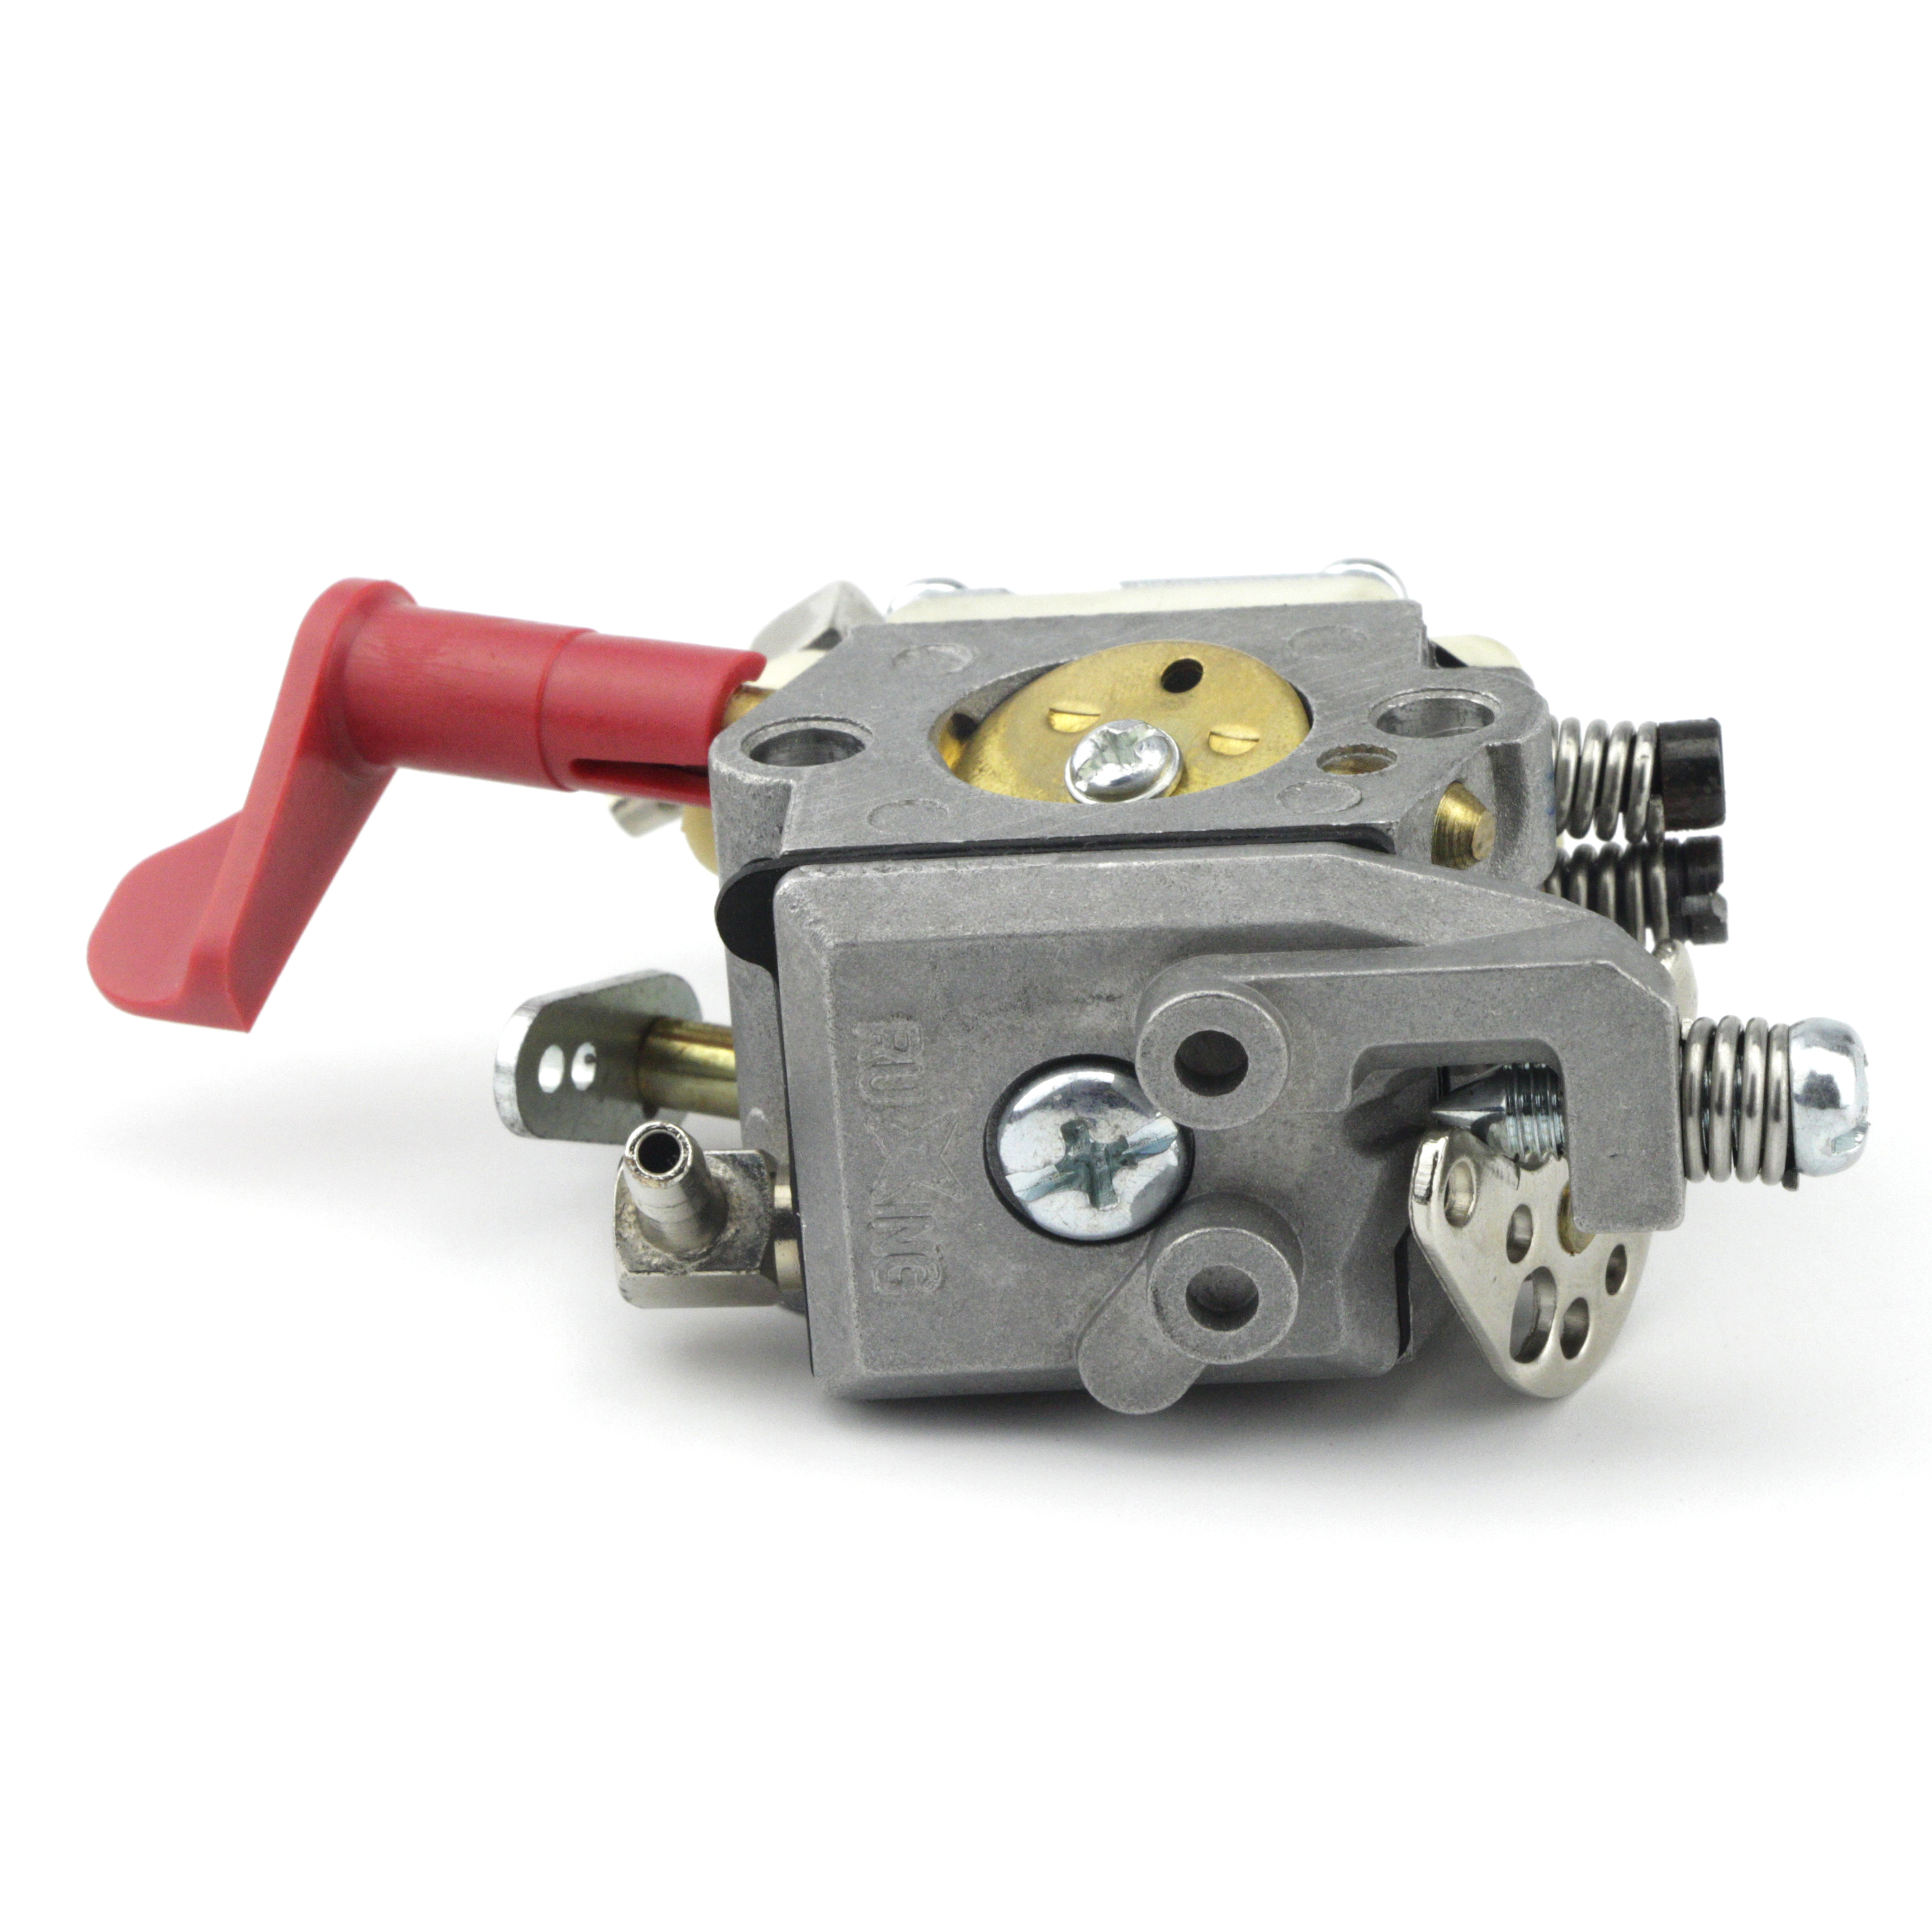 Walbro Carburetor WT997 668 fits Zenoah CY Engine for HPI FG Losi Rovan KM Carb